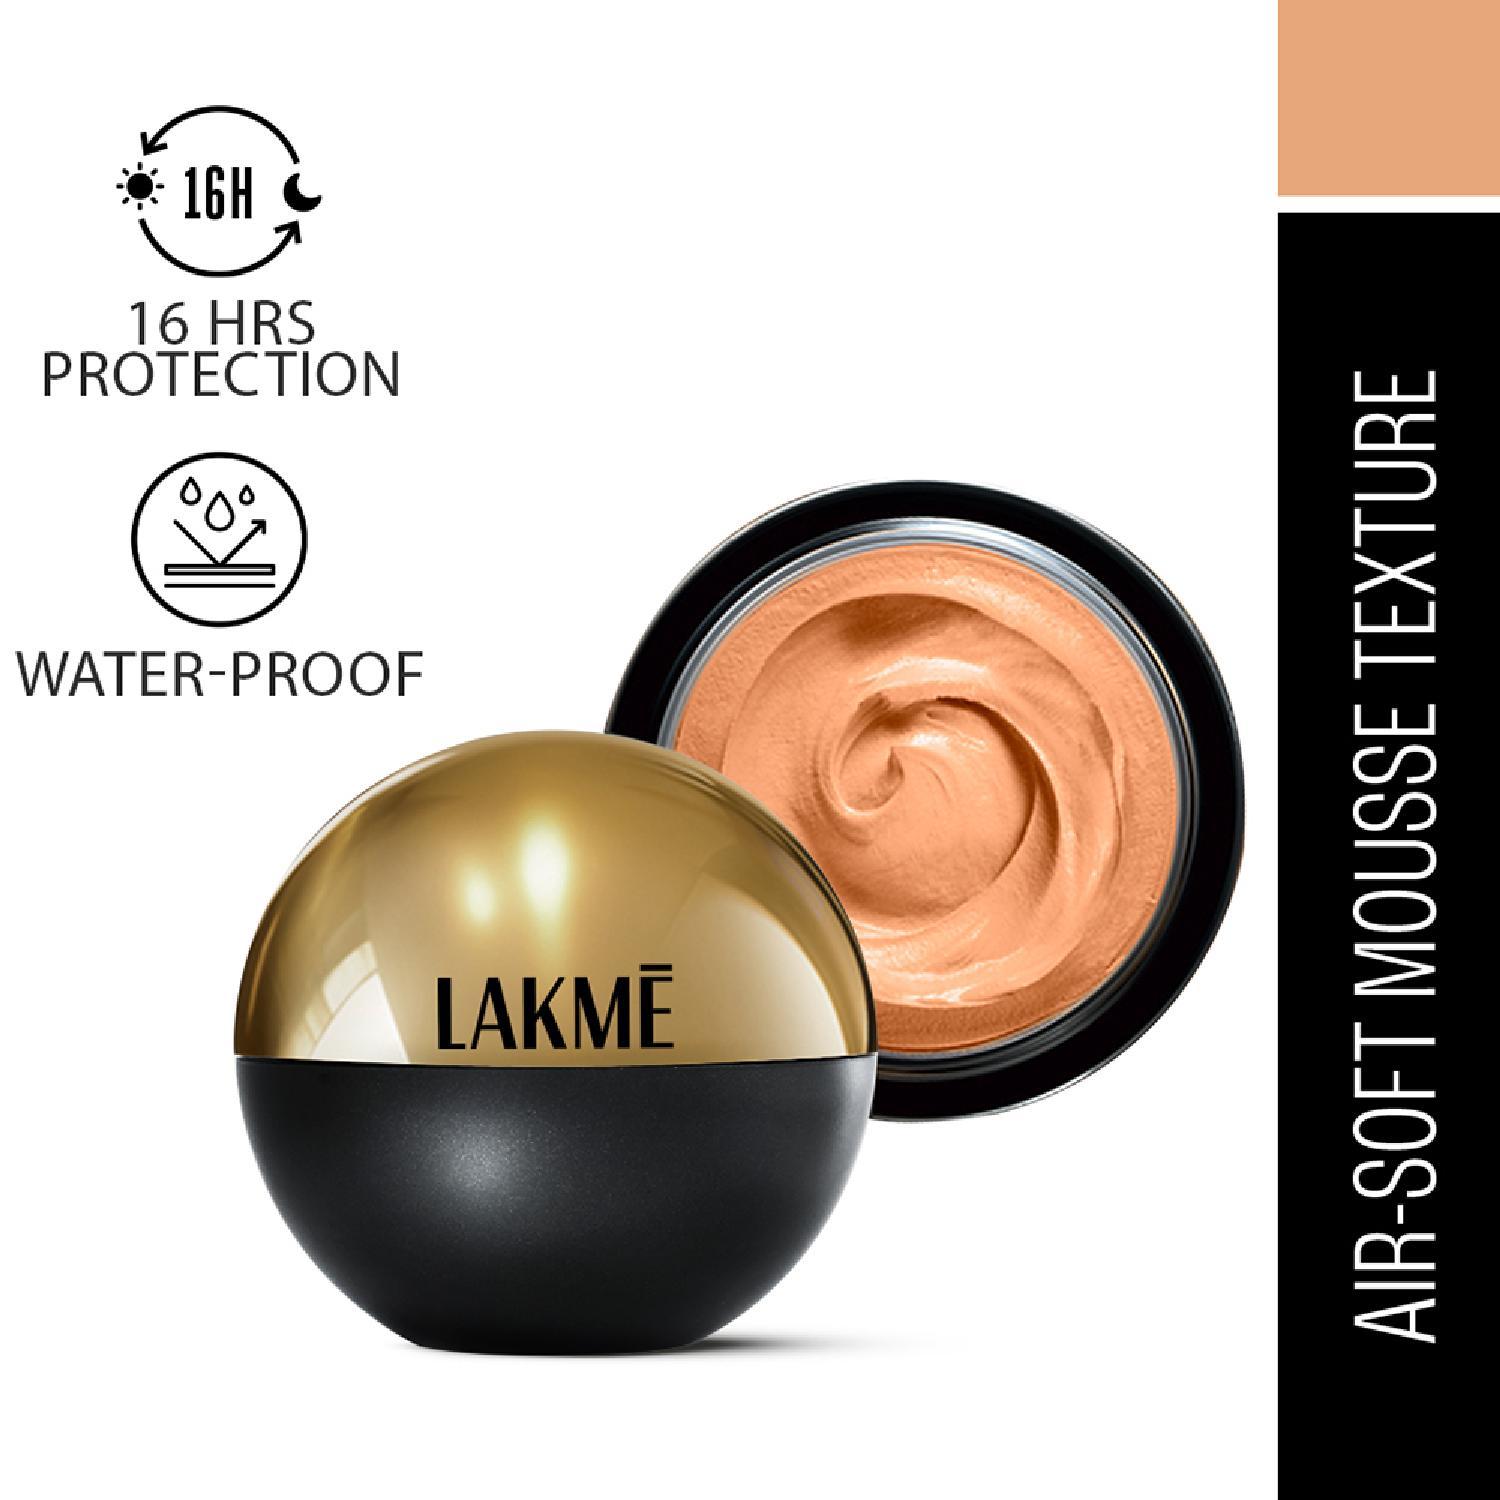 Lakme | Lakme Xtraordin-airy Mattereal Mousse Foundation, 06 Almond Honey (25 g)